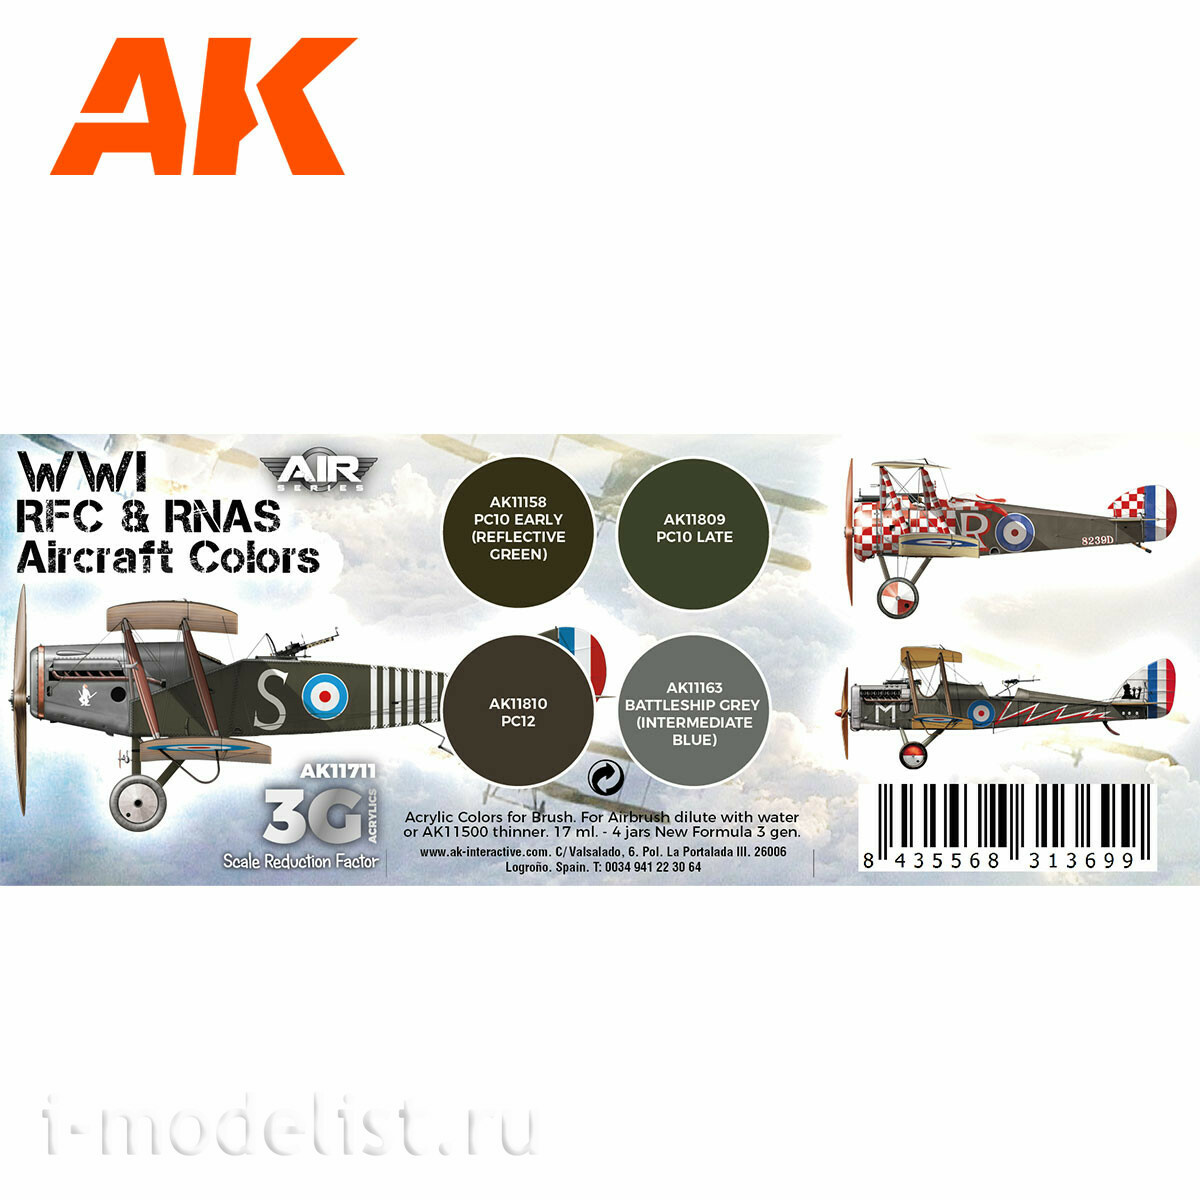 AK11711 AK Interactive Набор акриловых красок 